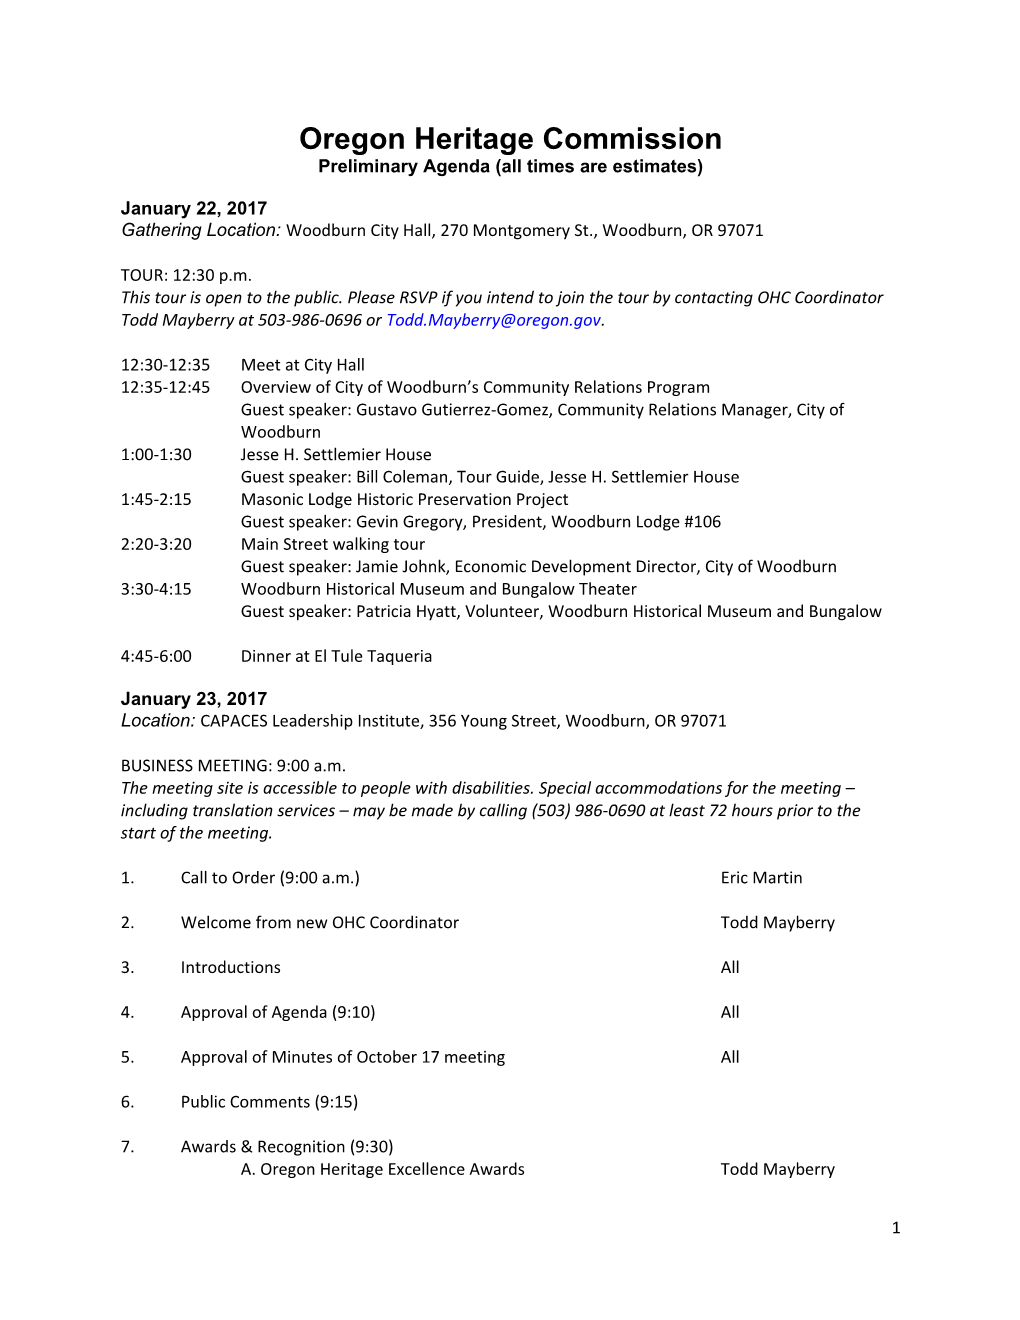 Oregon Heritage Commission Meeting Woodburn Agenda 1-23-2017